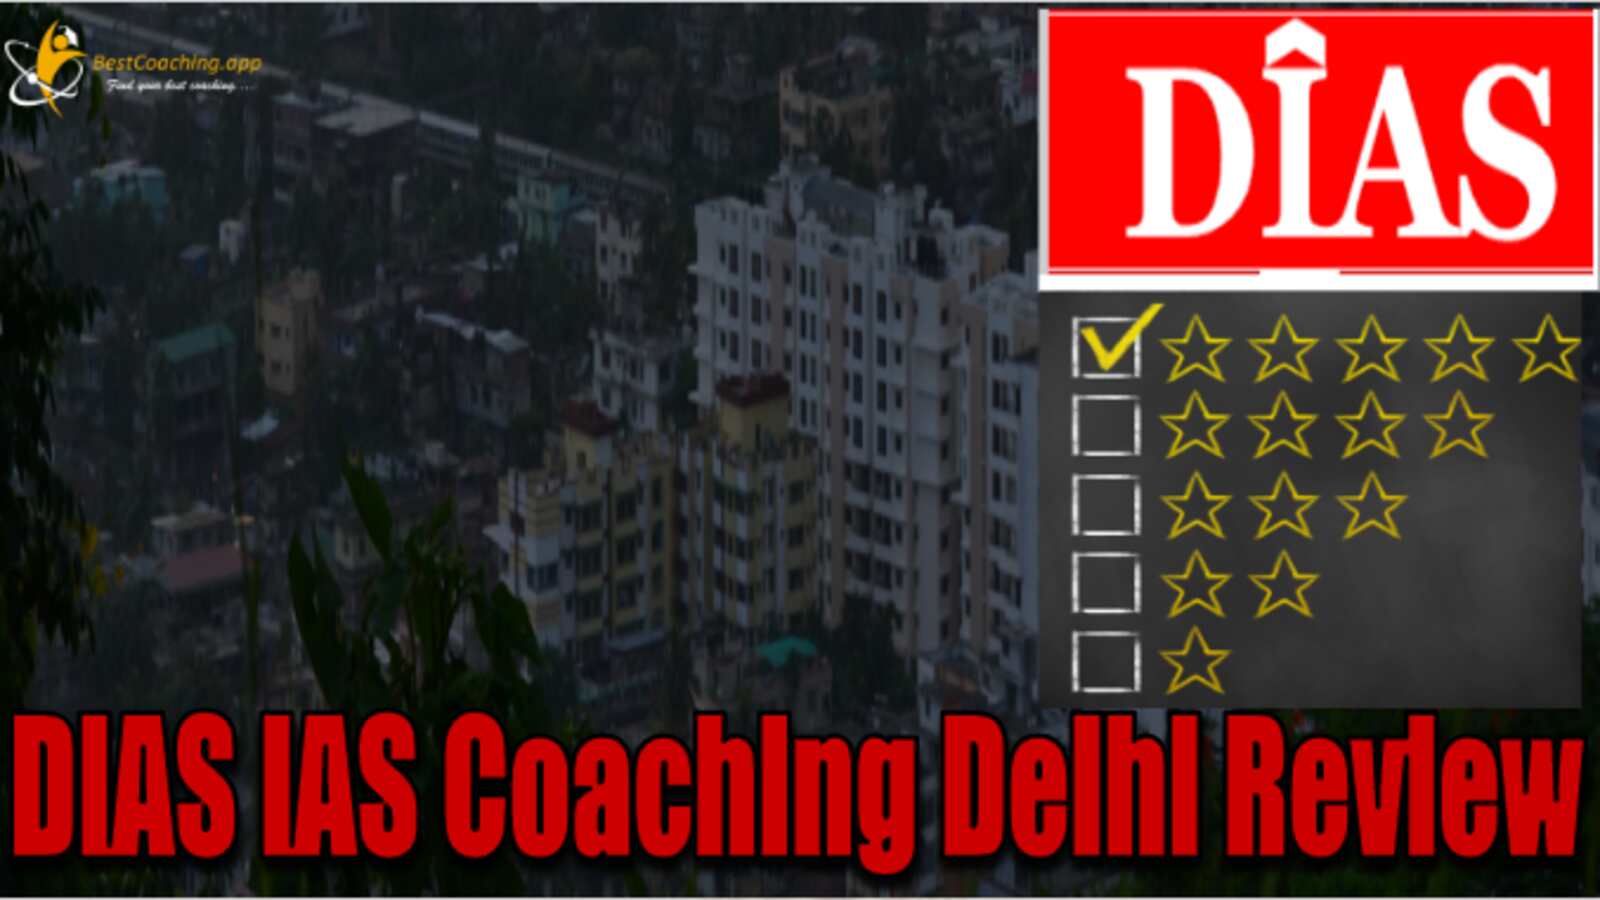 DIAS IAS Coaching in Delhi Review